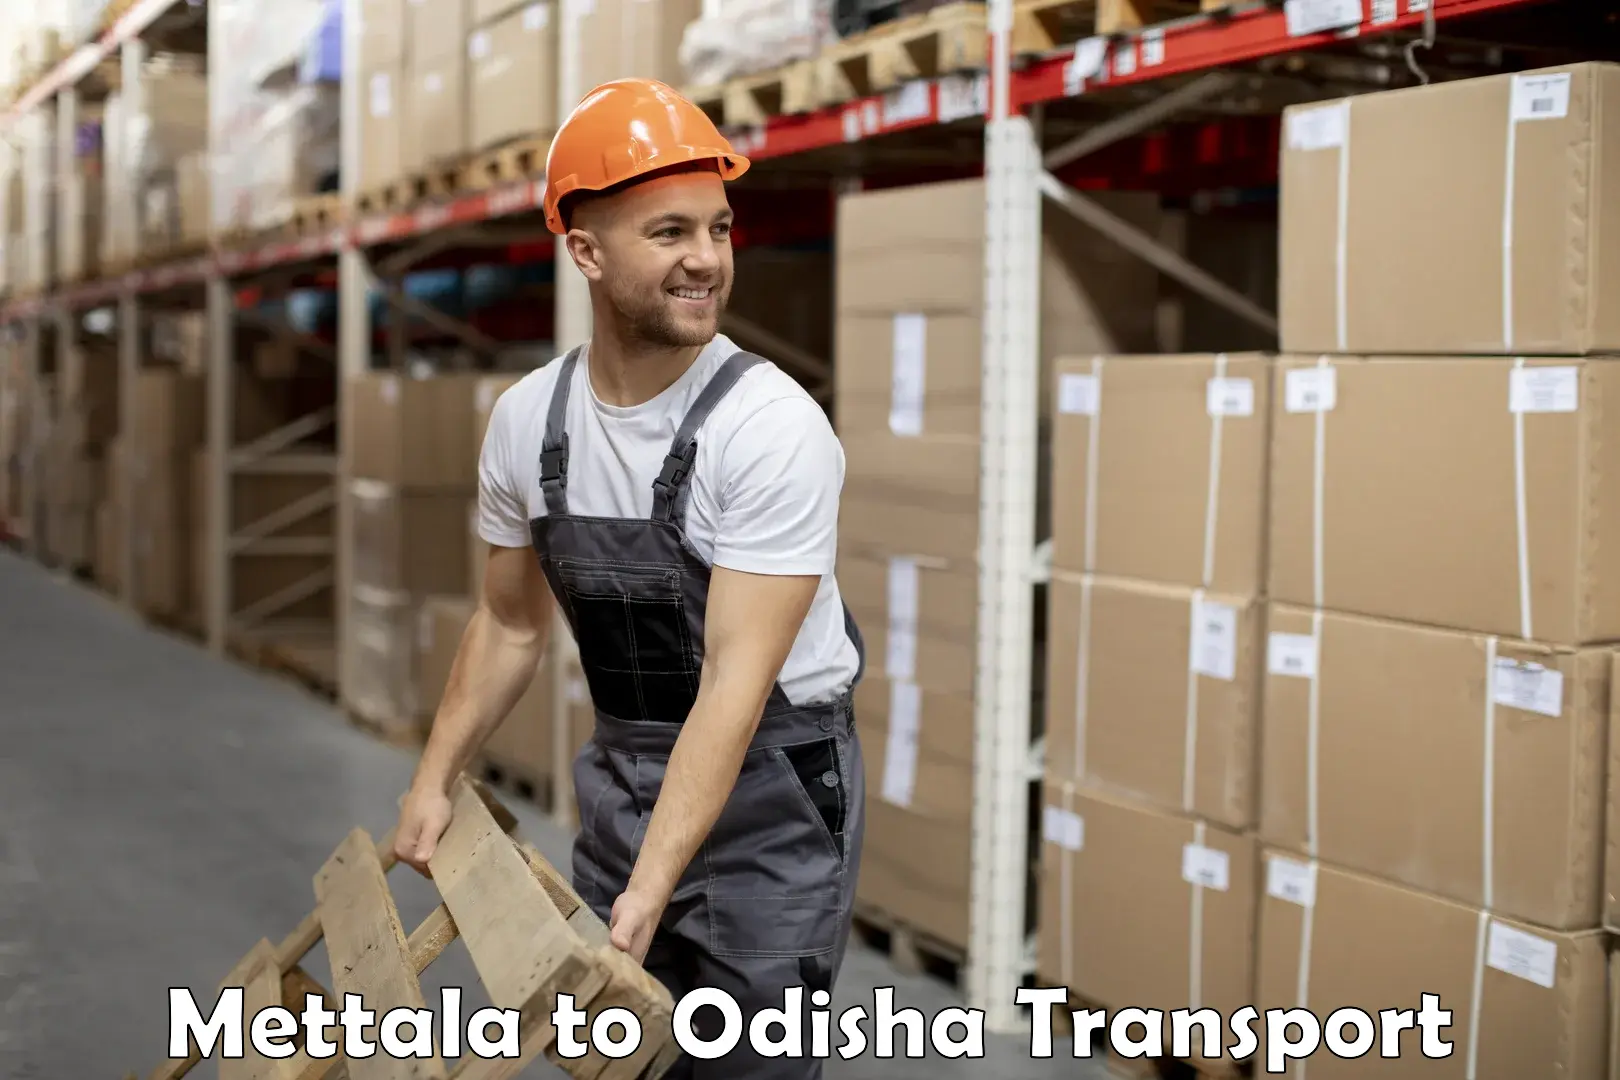 Bike shipping service Mettala to Sohela